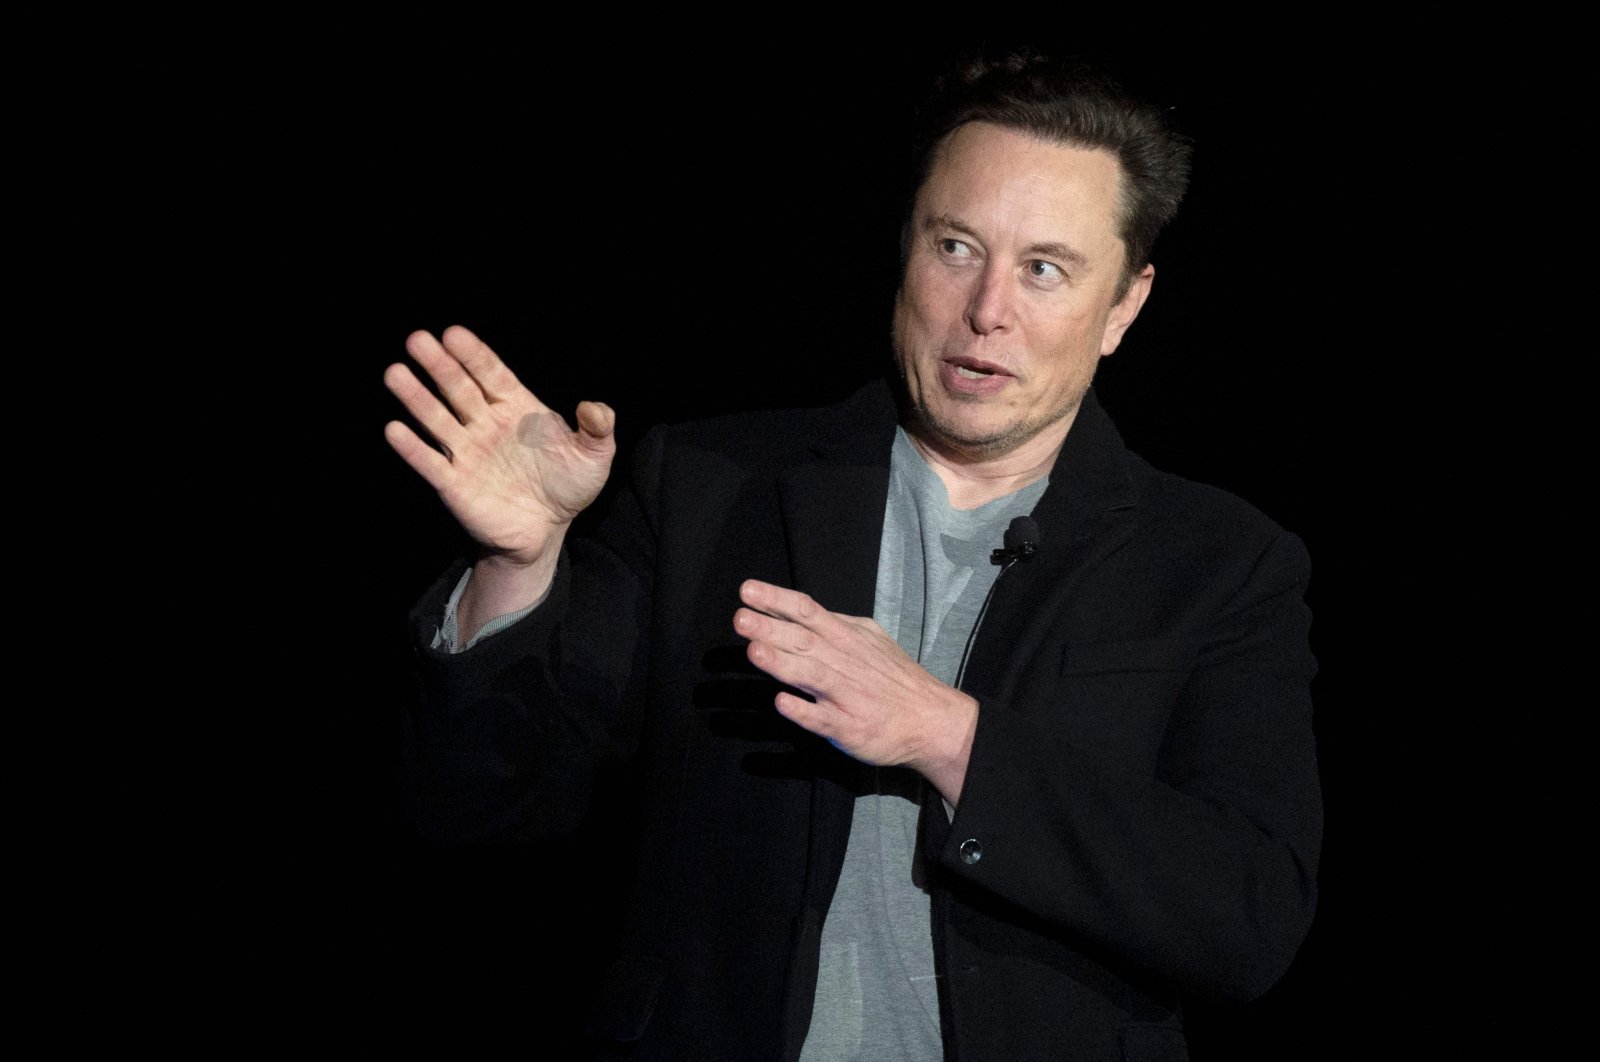 Musk menjual $ 0,6 miliar saham Tesla, mengutip kemungkinan kesepakatan Twitter yang dipaksakan